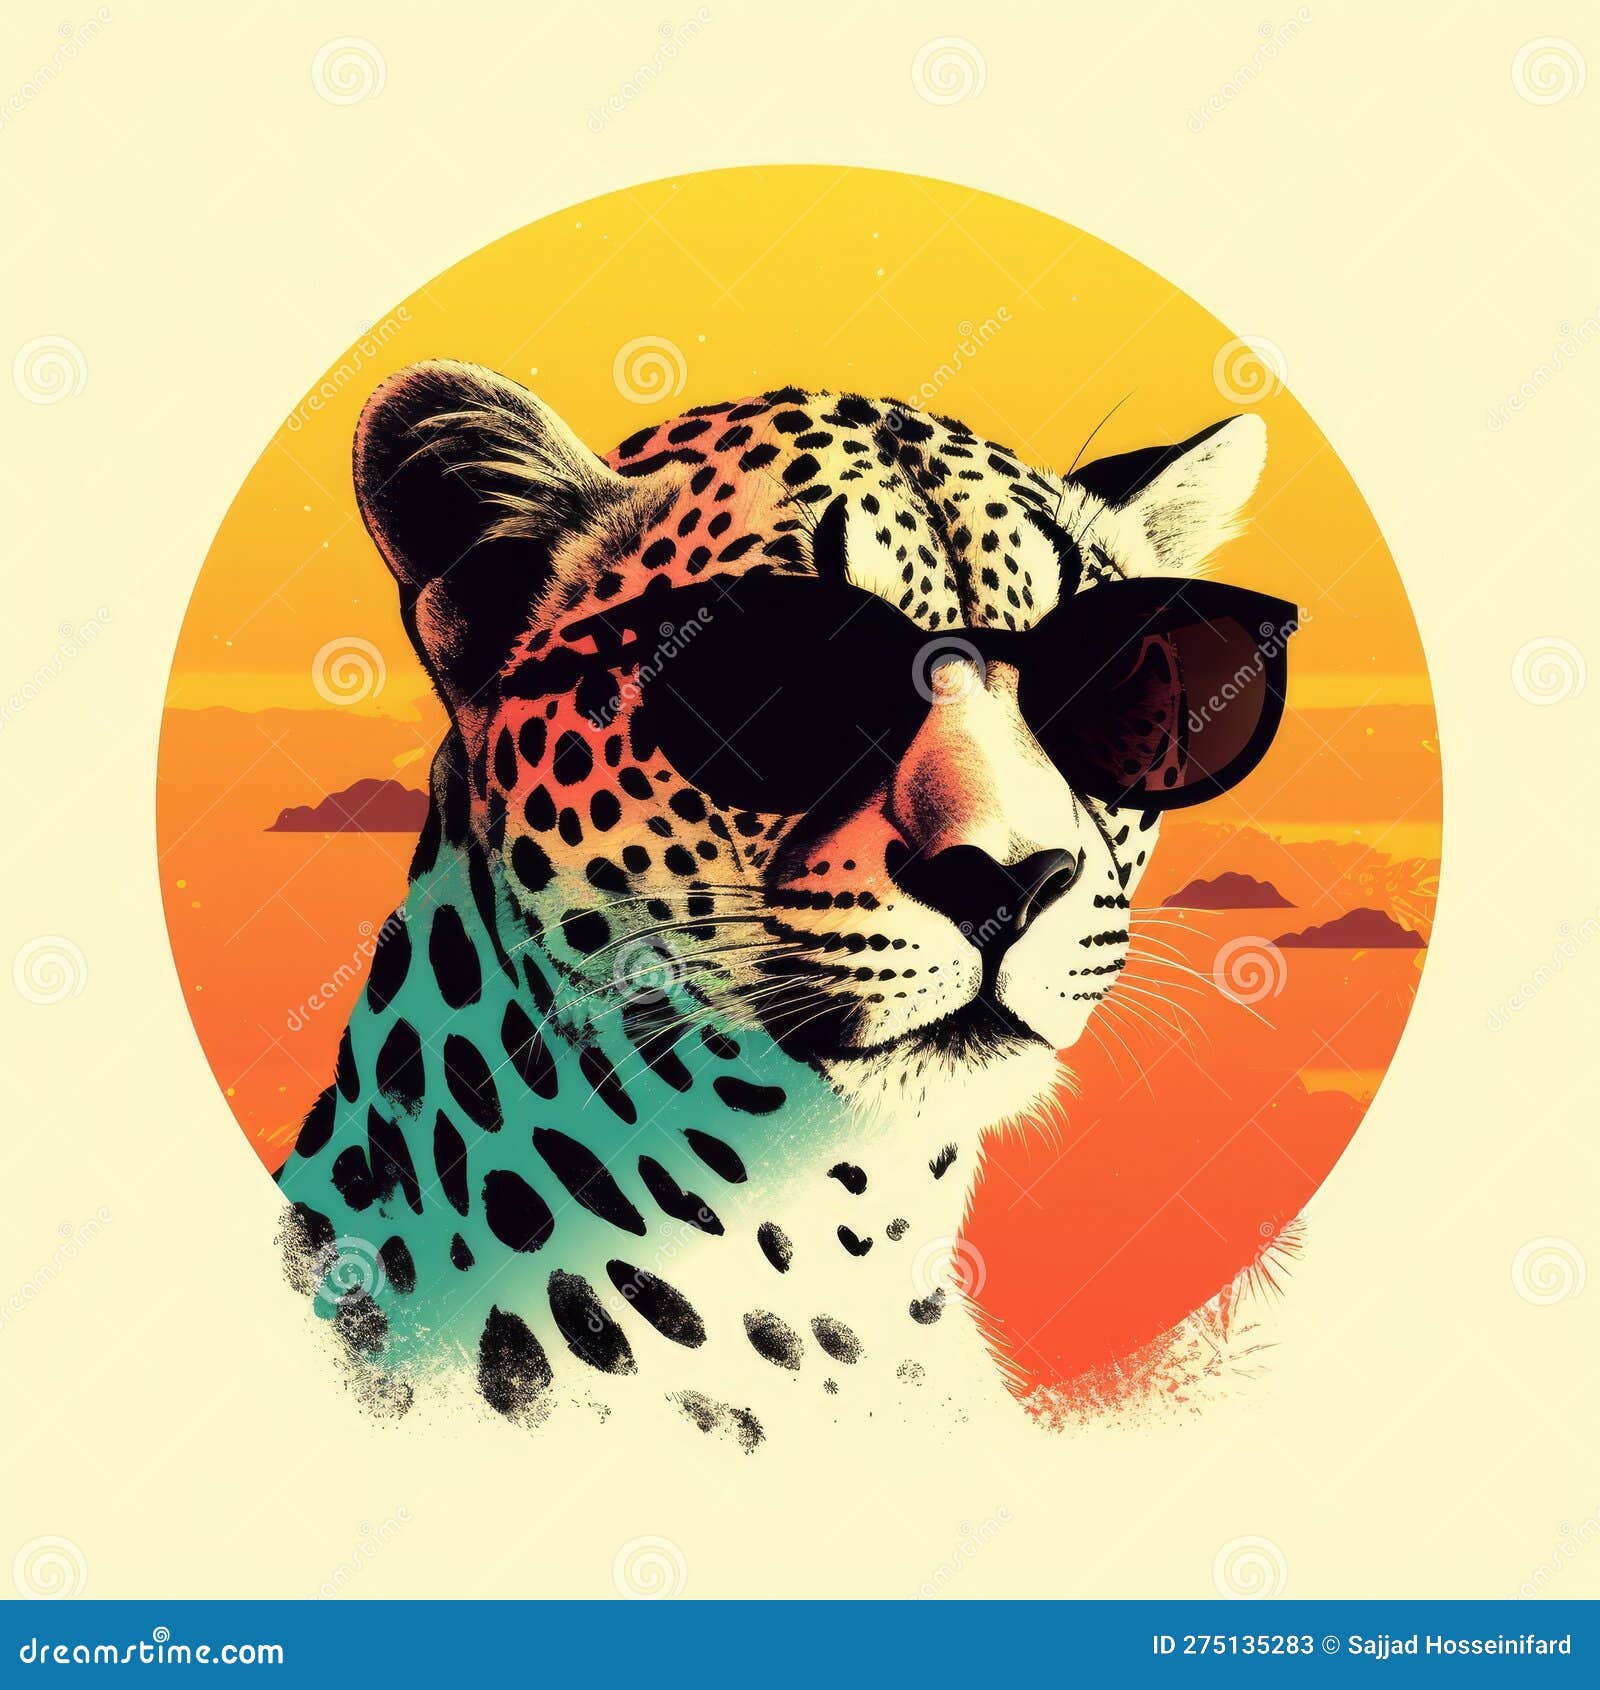 Cheetah in Sunglasses stock illustration. Illustration of hand - 275135283